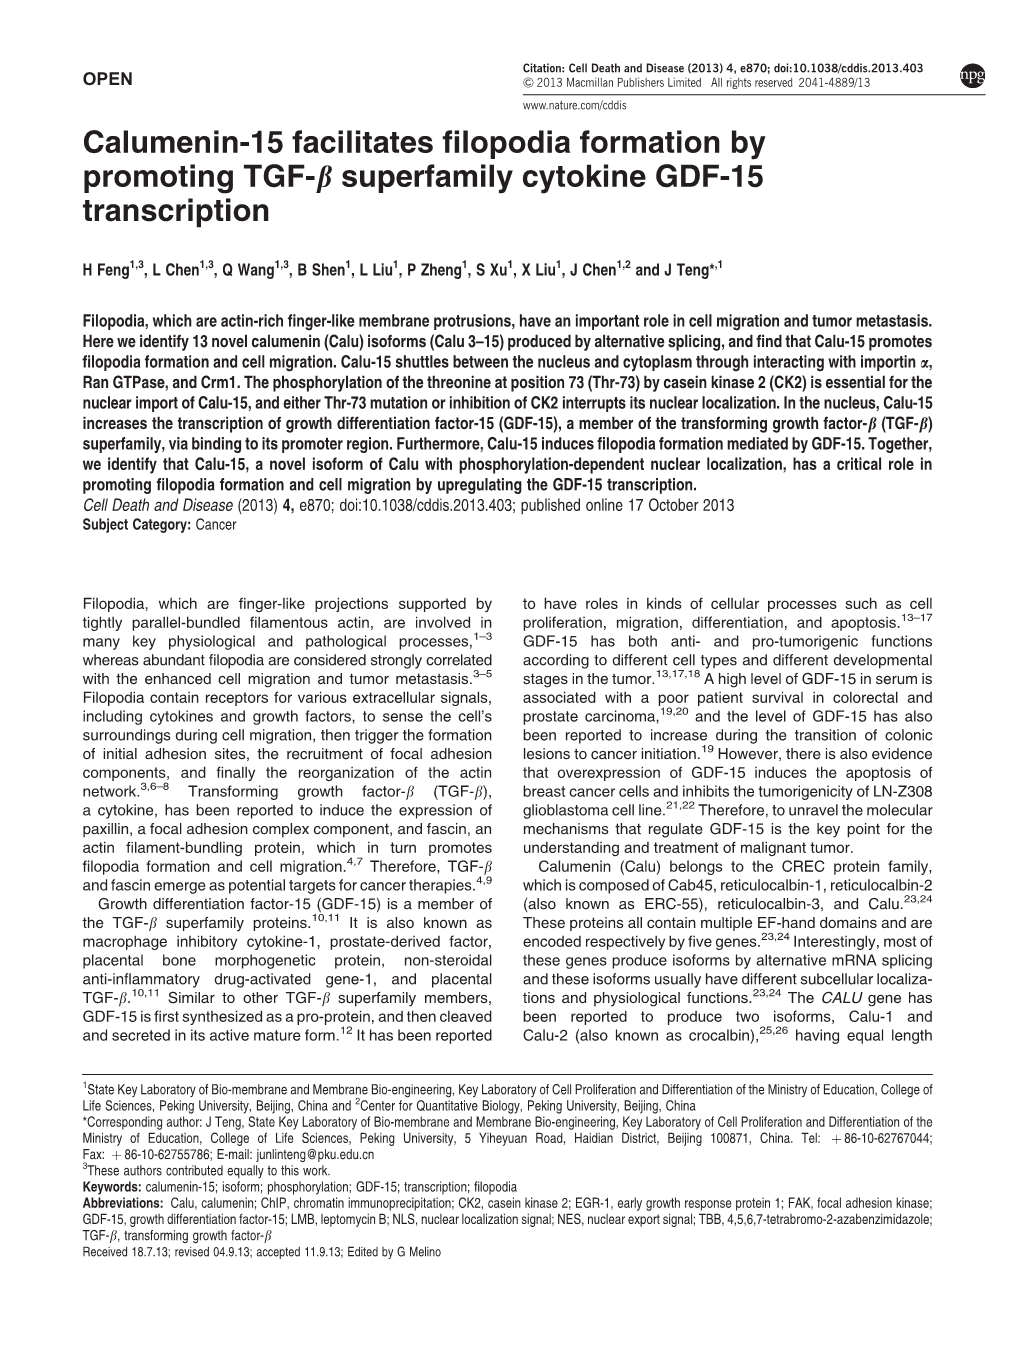 Calumenin-15 Facilitates Filopodia Formation by Promoting TGF-&Beta; Superfamily Cytokine GDF-15 Transcription